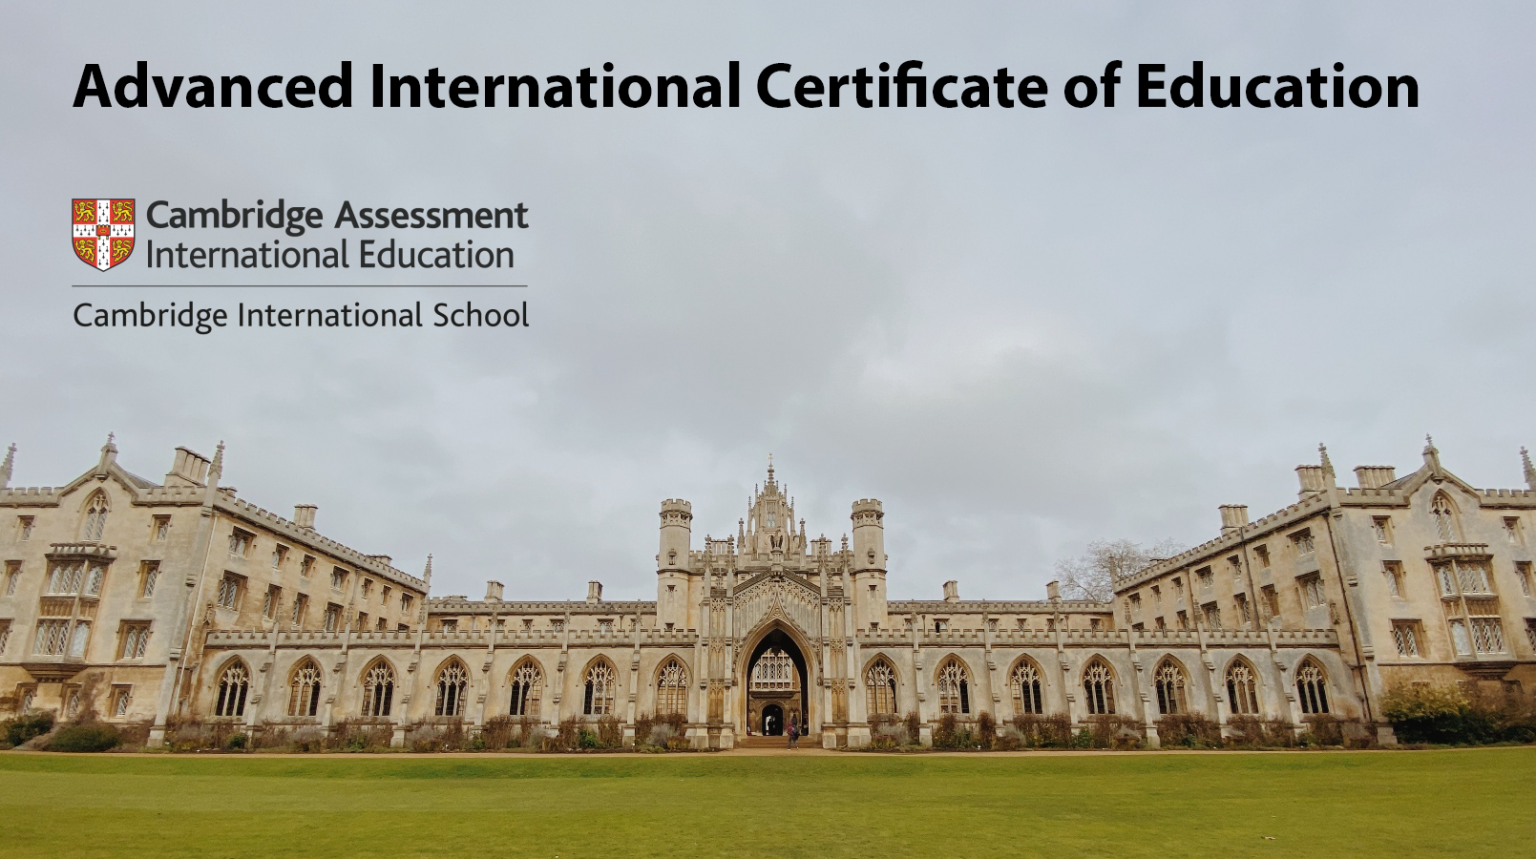 aice Advanced International Certificate of Education